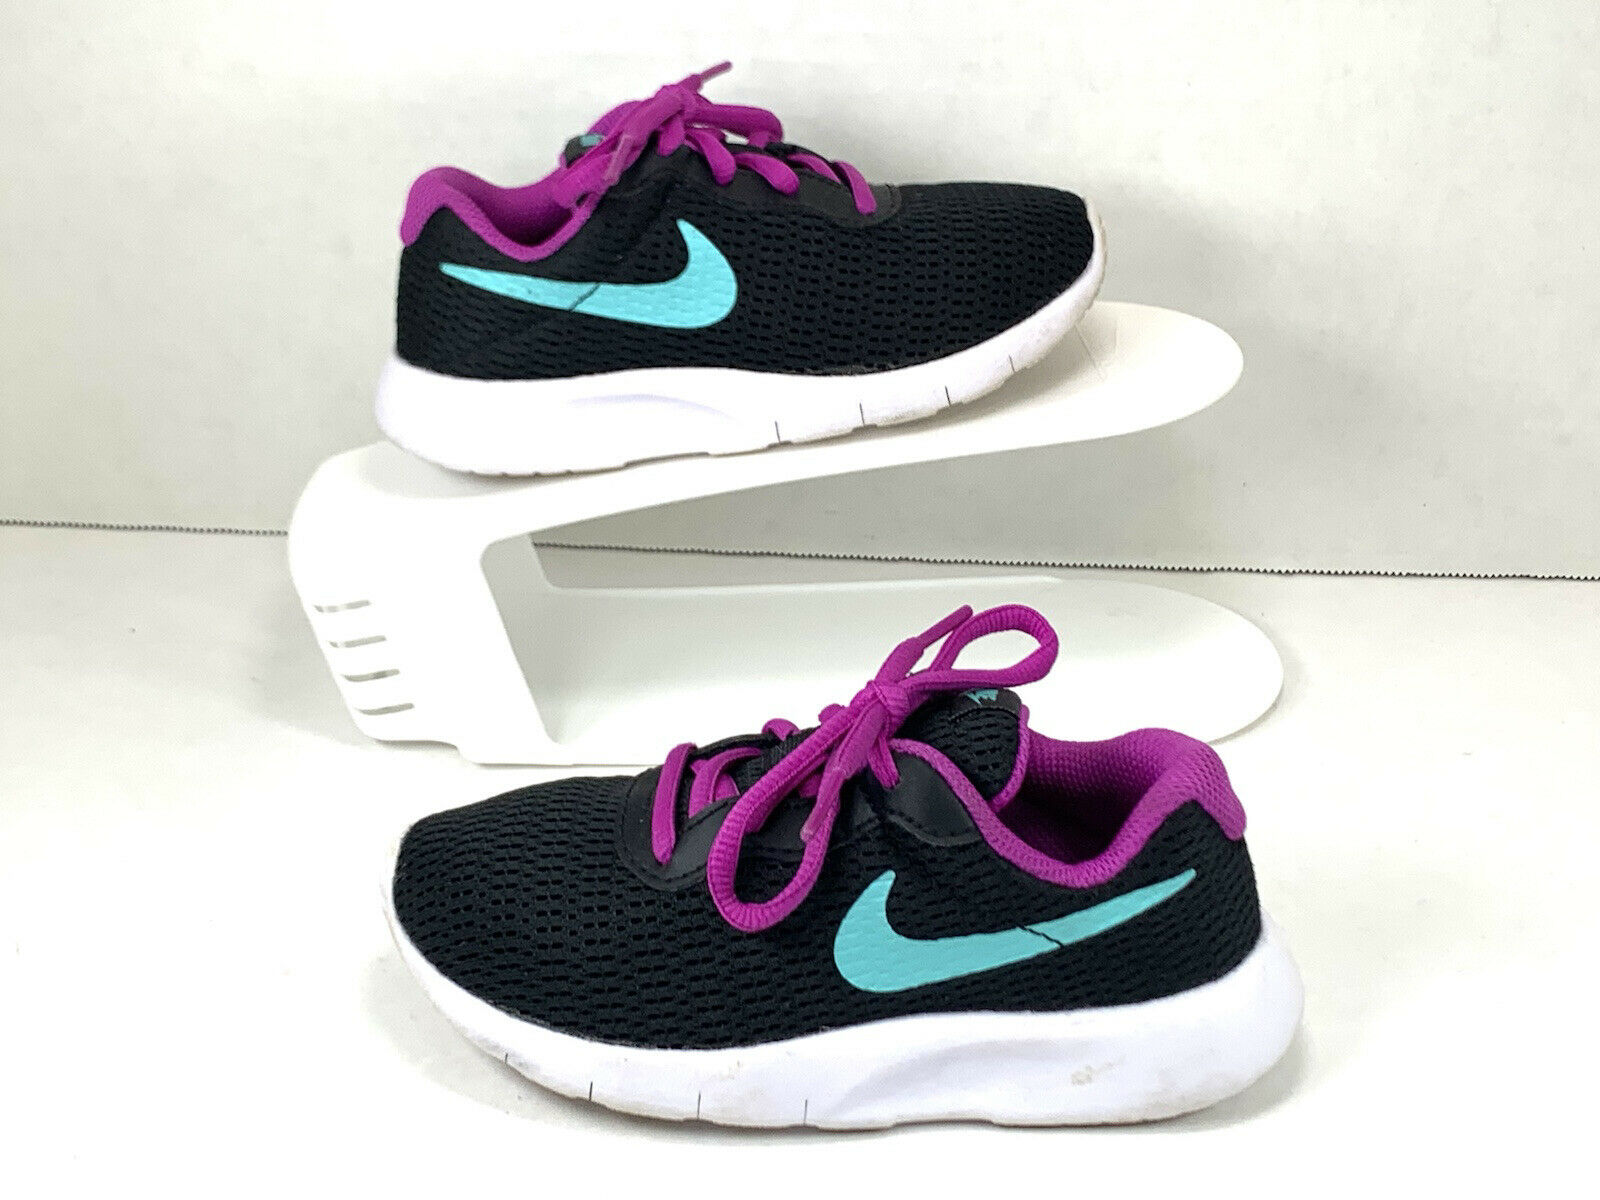 Nike Little Kids Tanjun Black Purple Running Shoes Sneakers Size 11C #818381-026